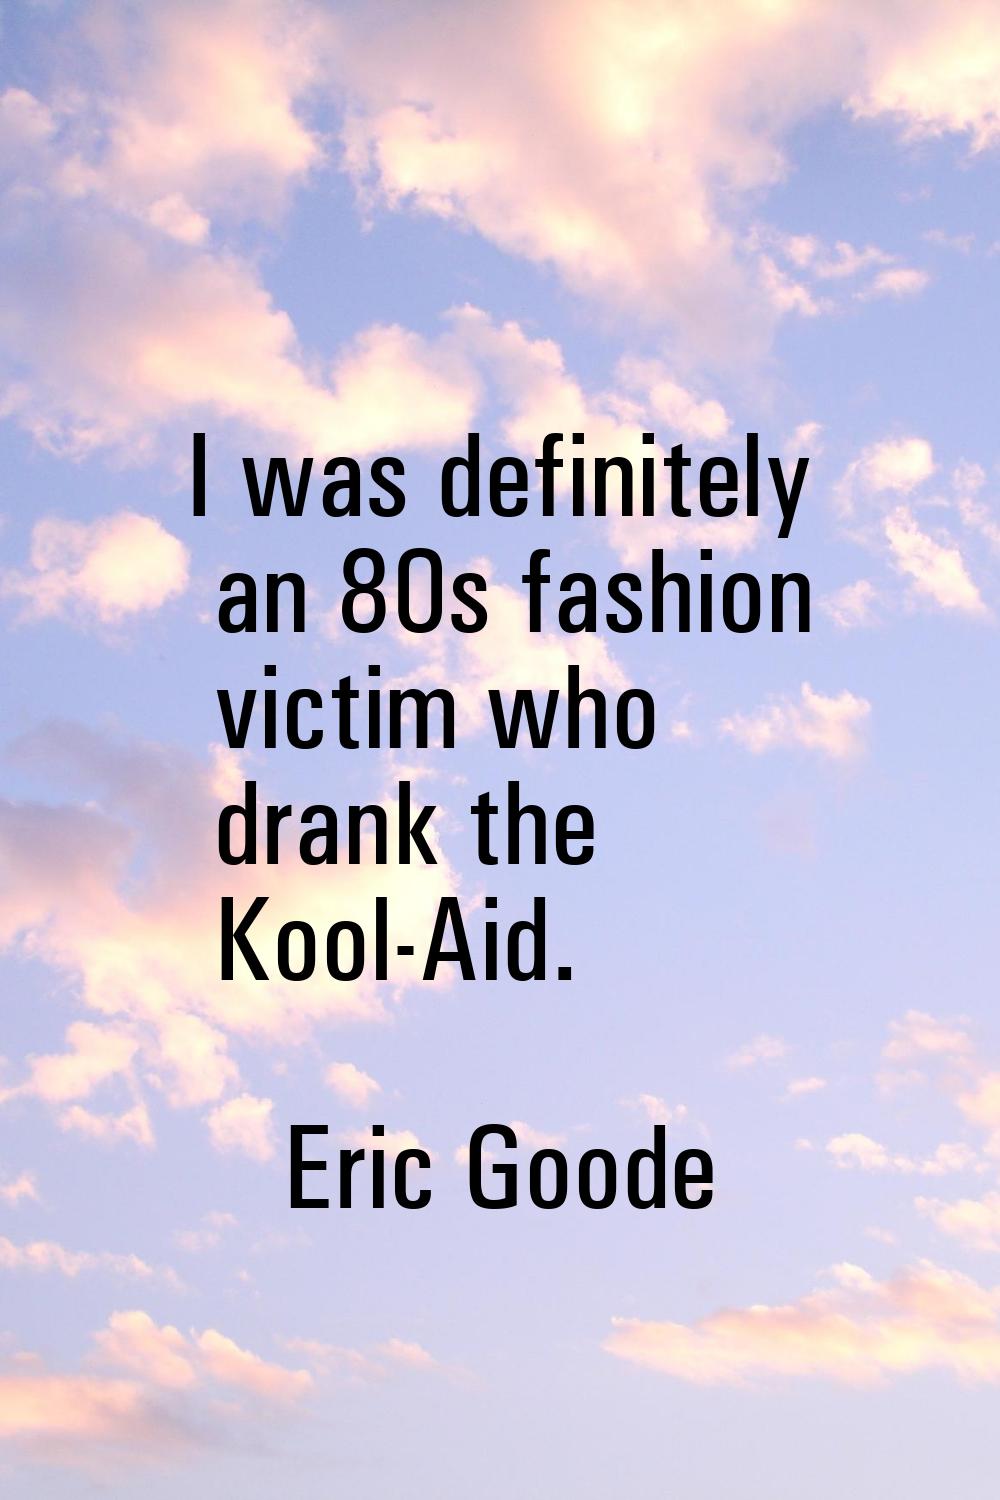 I was definitely an 80s fashion victim who drank the Kool-Aid.